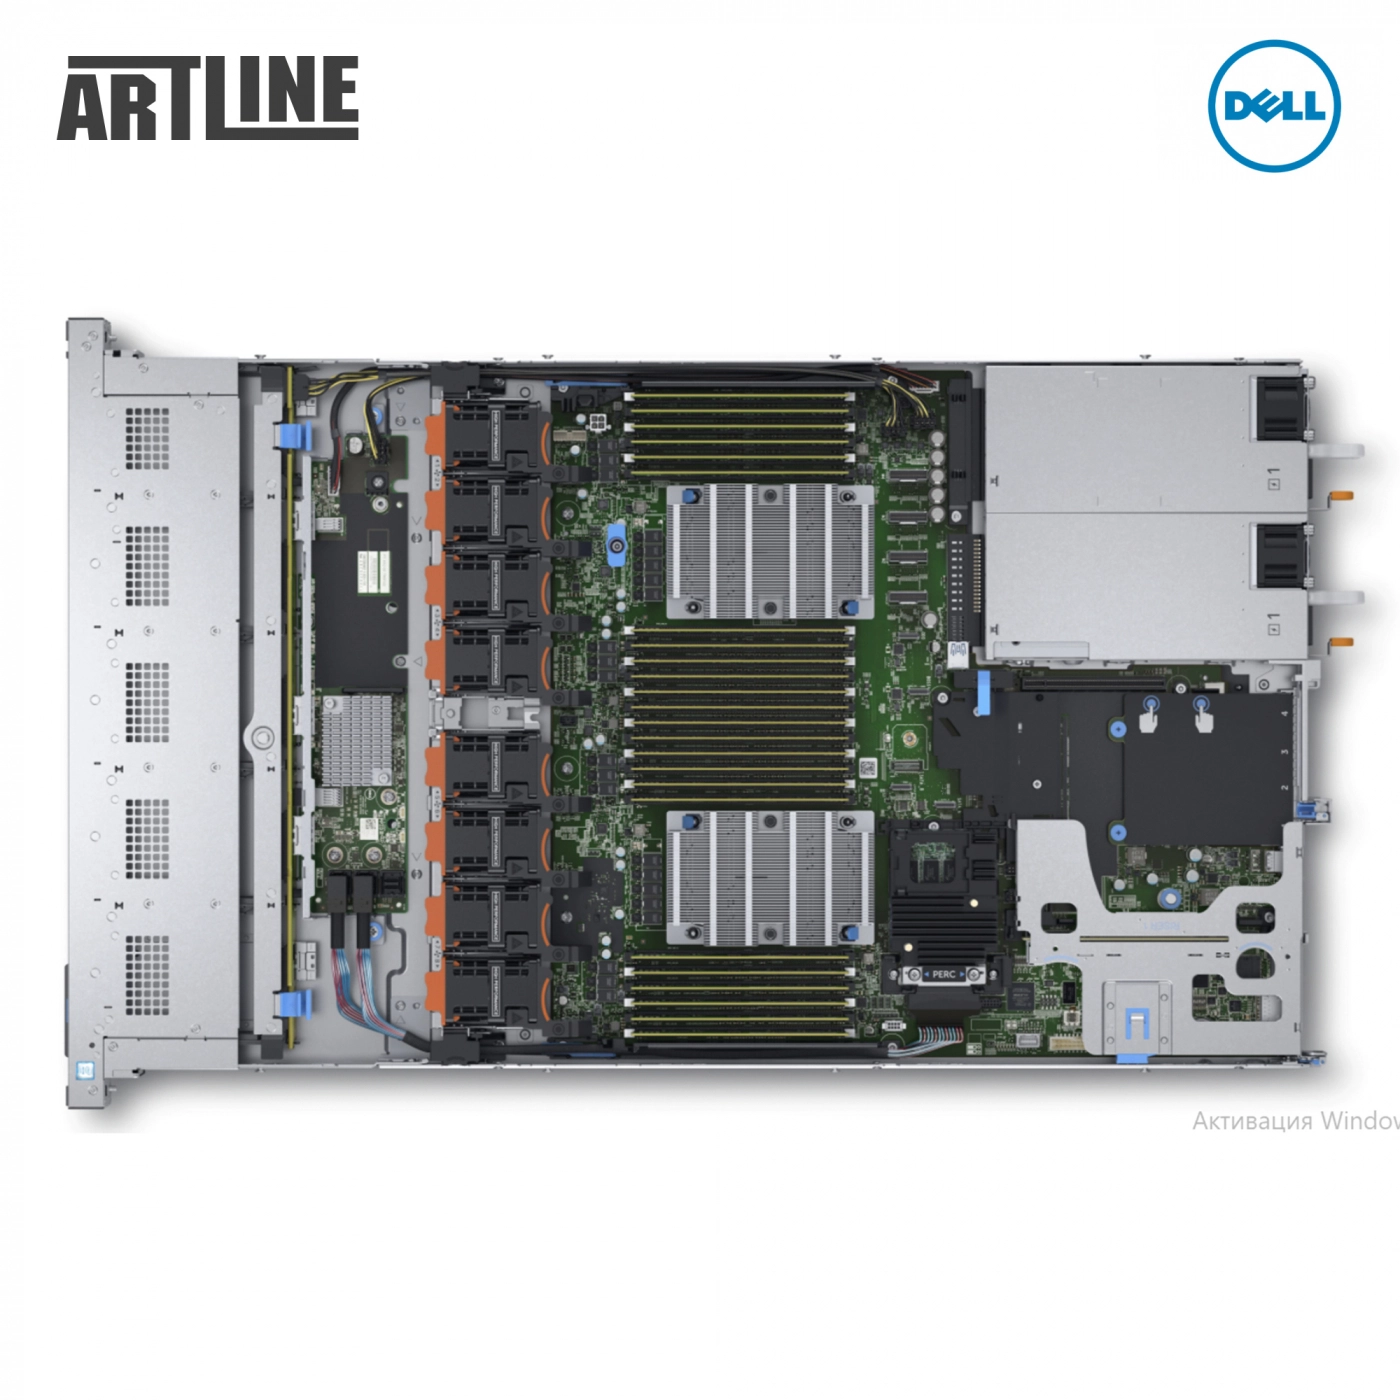 Купить Сервер Dell PowerEdge R640 (R640v06) - фото 4